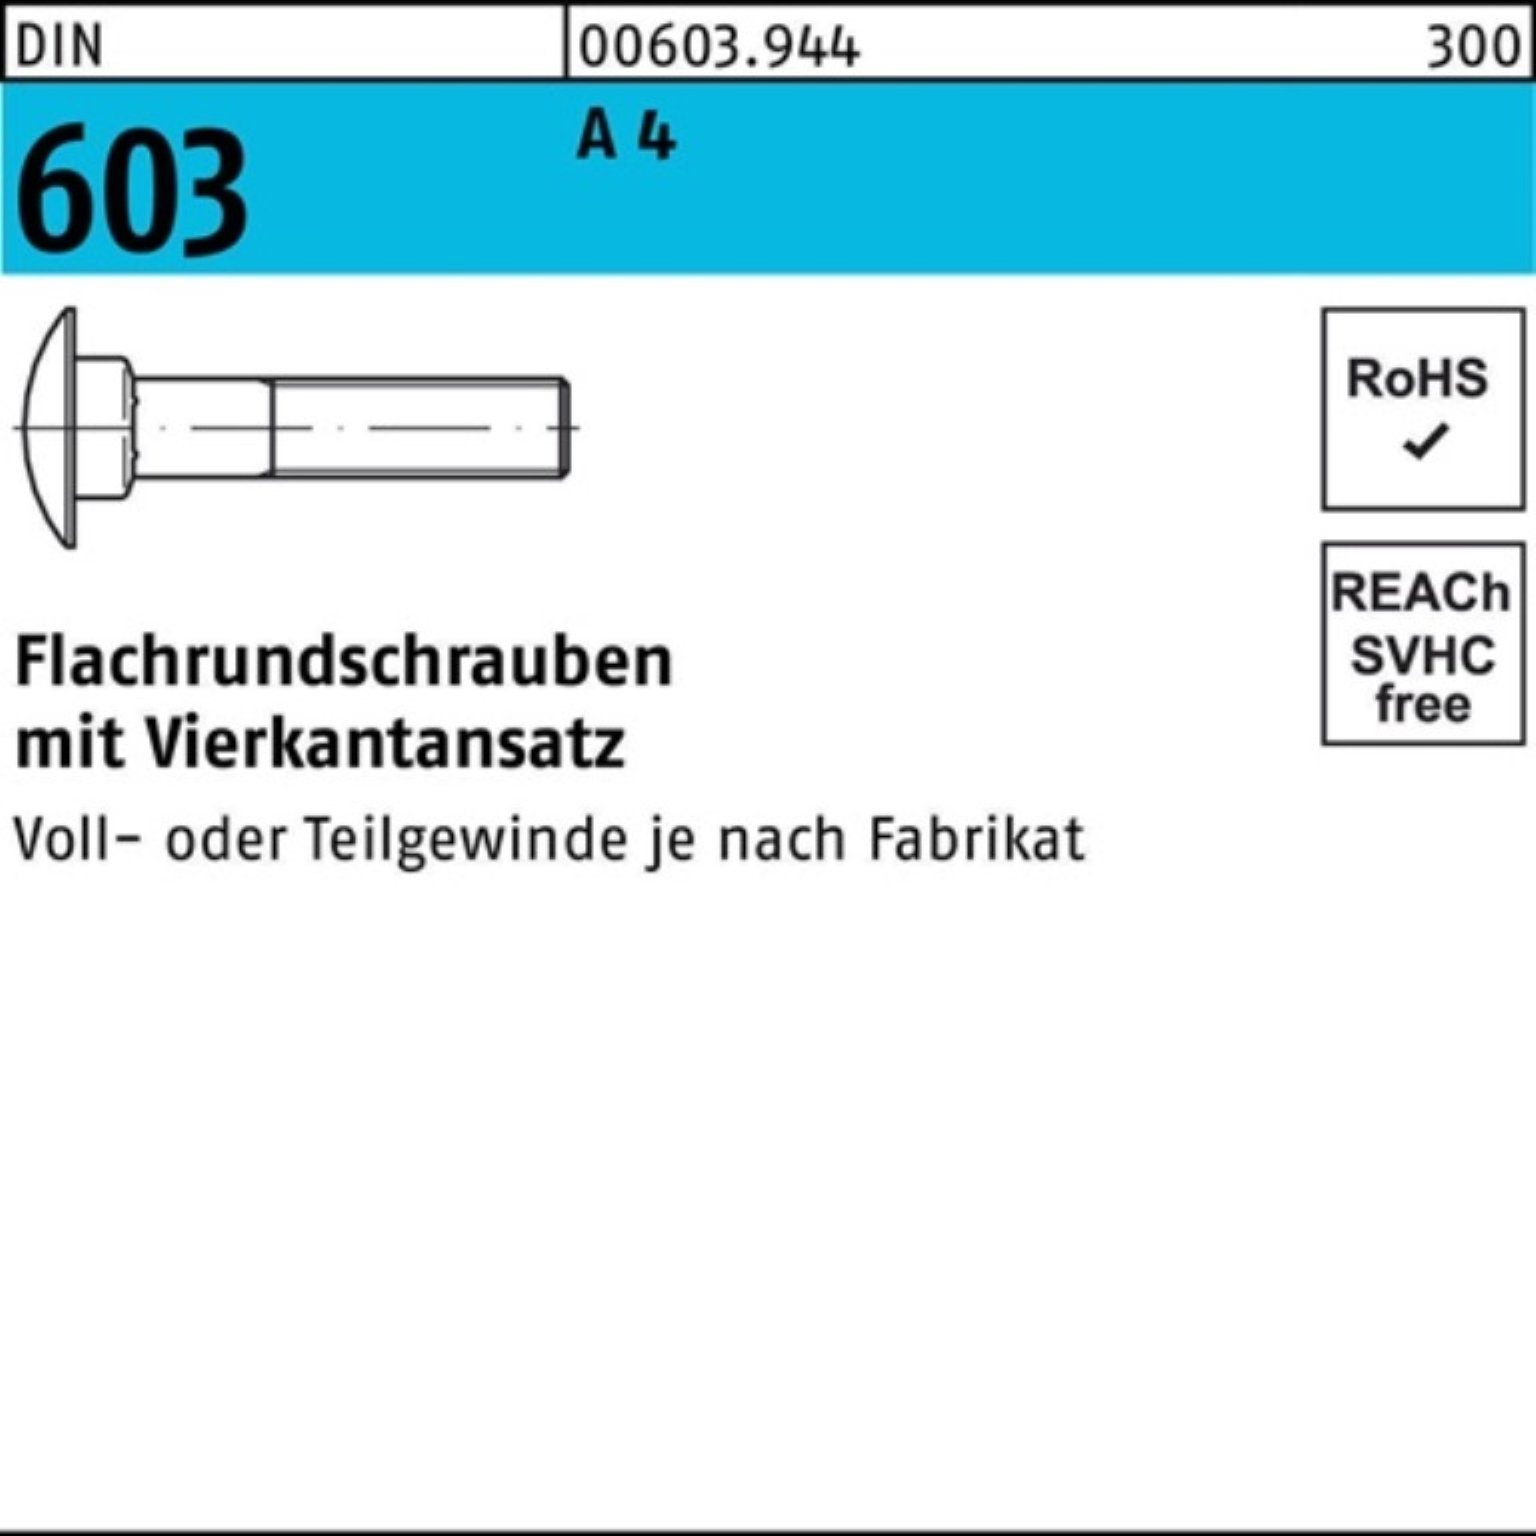 Reyher Schraube 100er Pack Flachrundschraube DIN 603 Vierkantansatz M16x 130 A 4 1 St